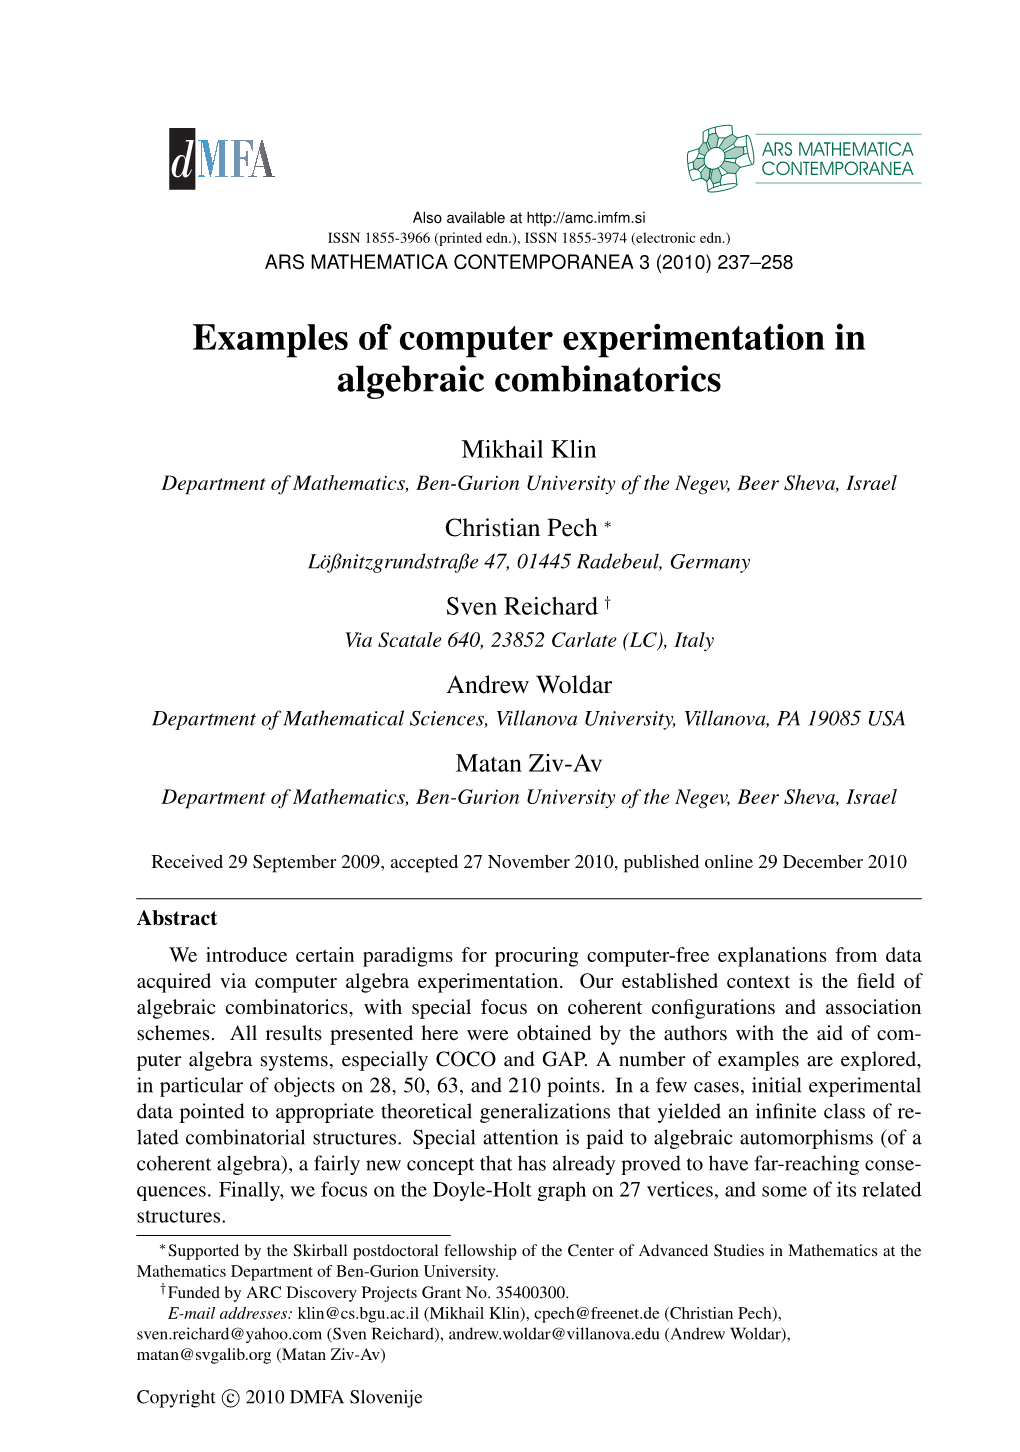 Examples of Computer Experimentation in Algebraic Combinatorics